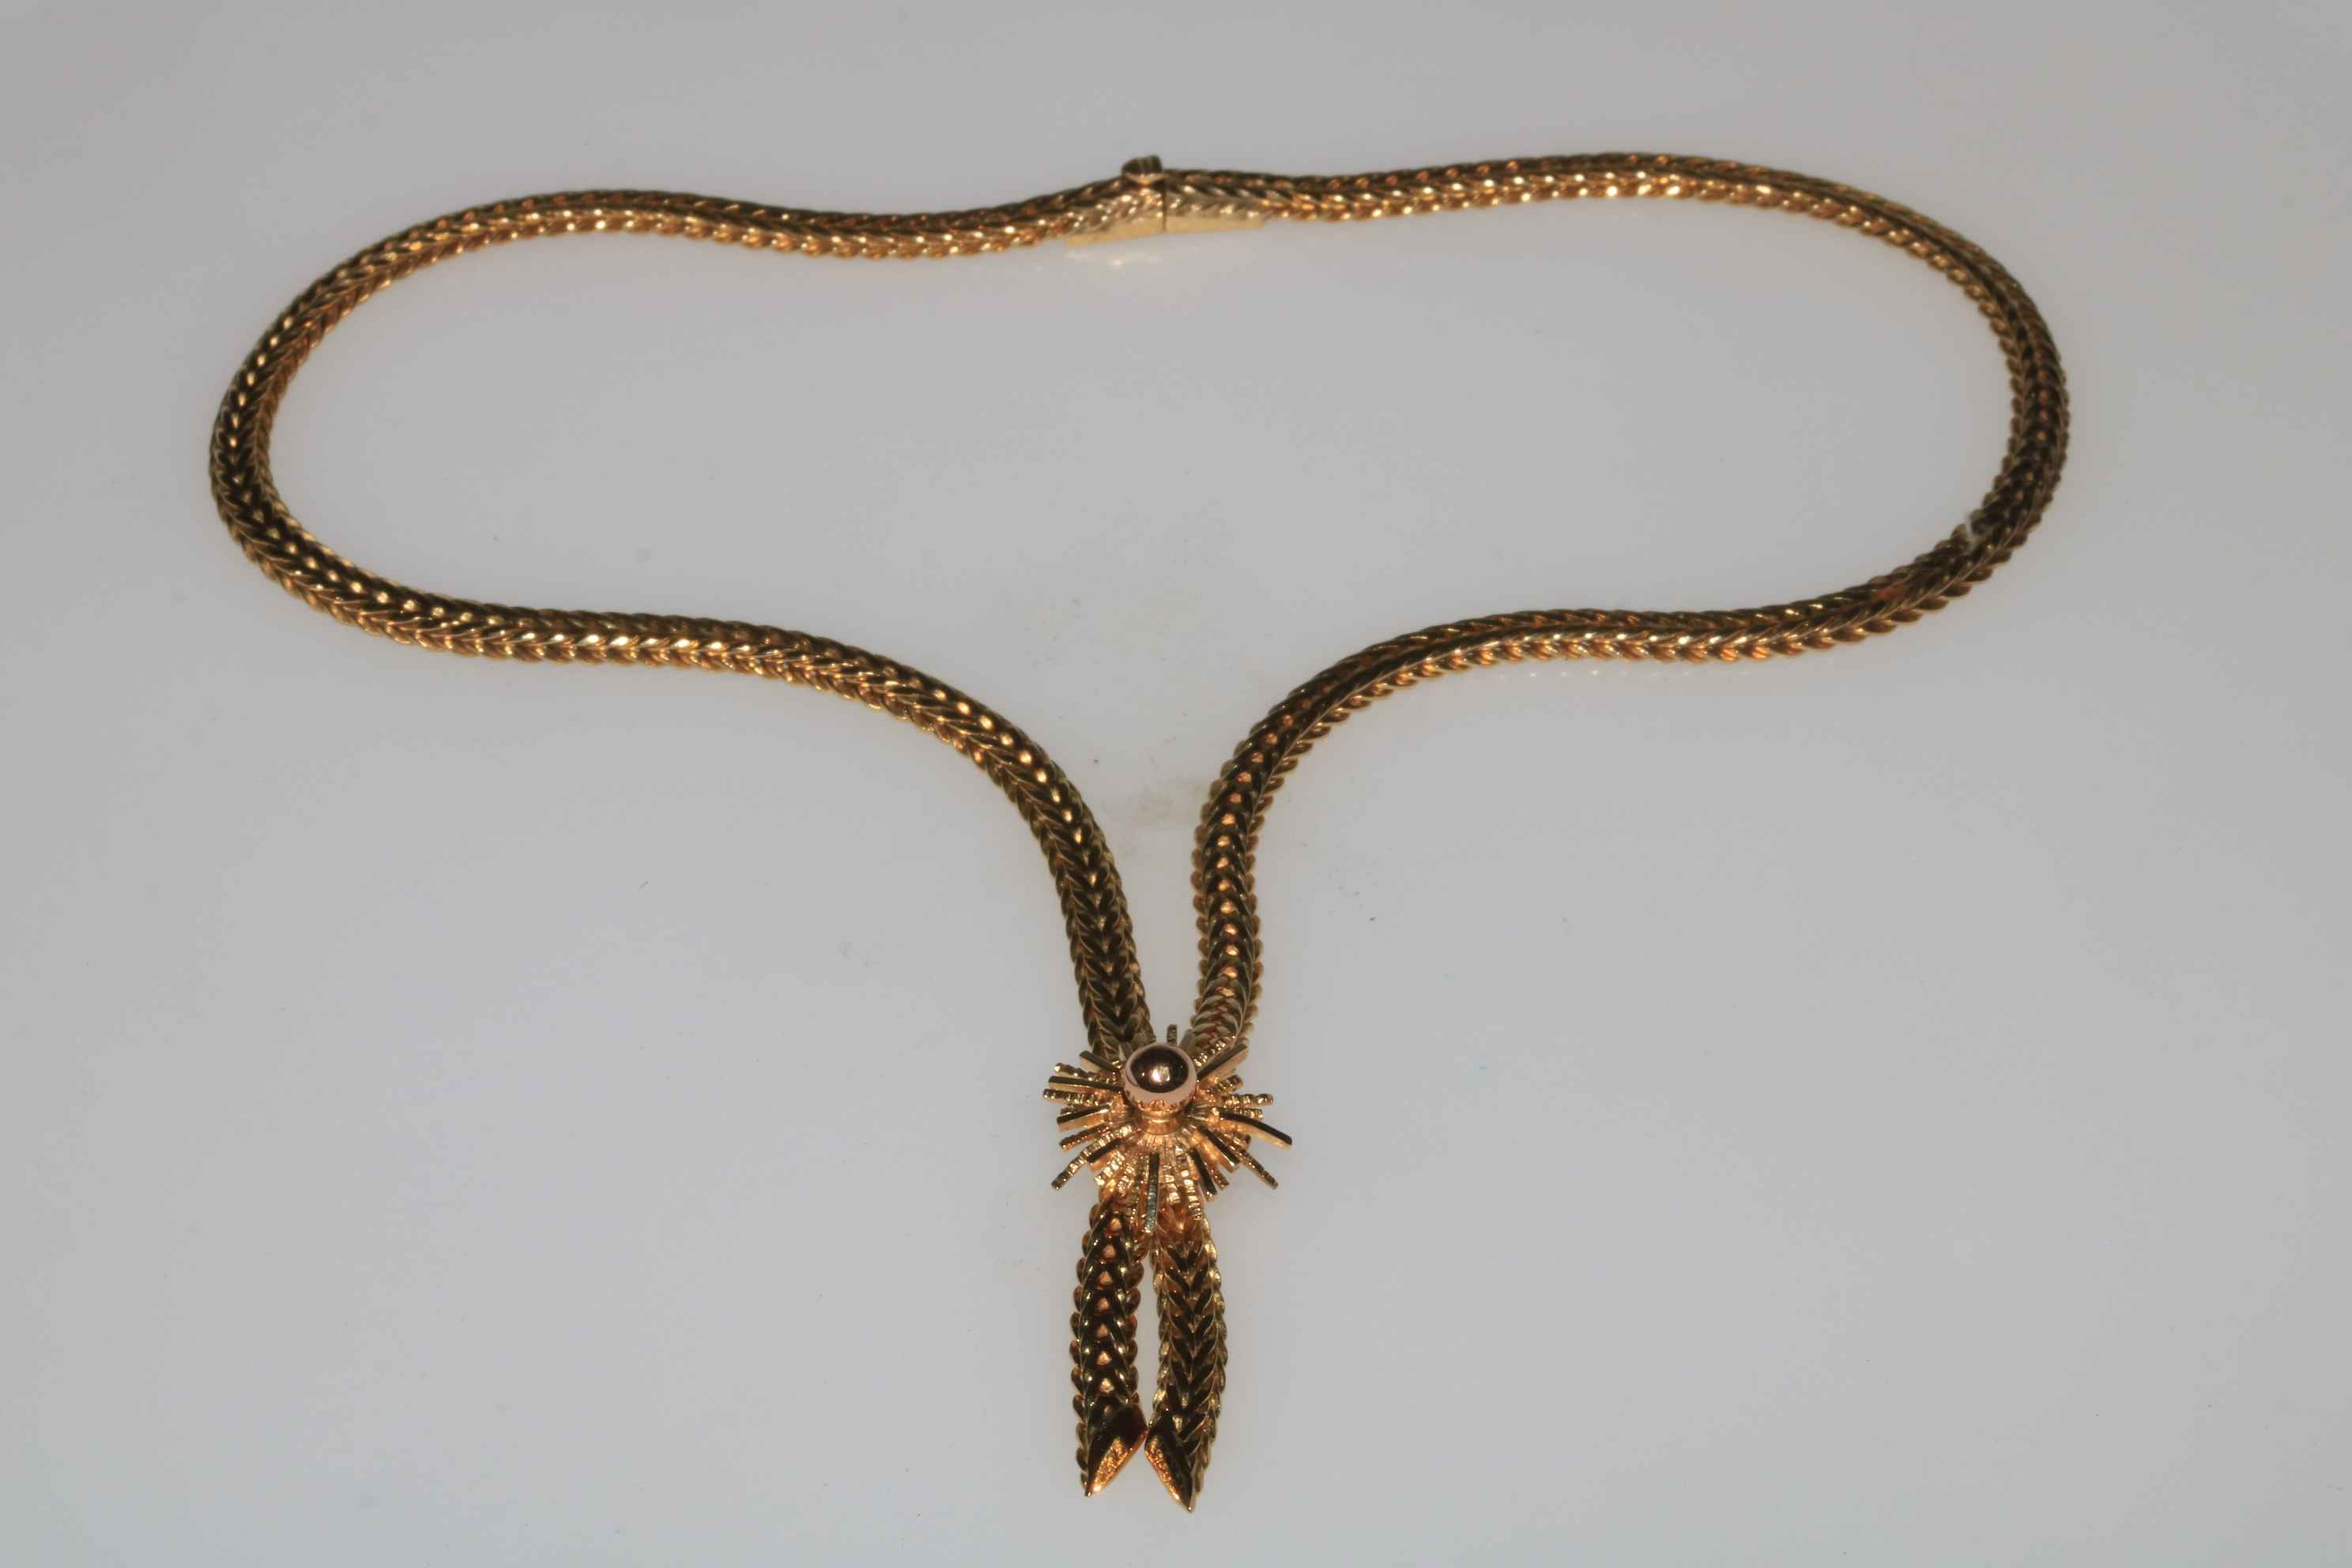 9 carat yellow gold ladies choker link necklace.